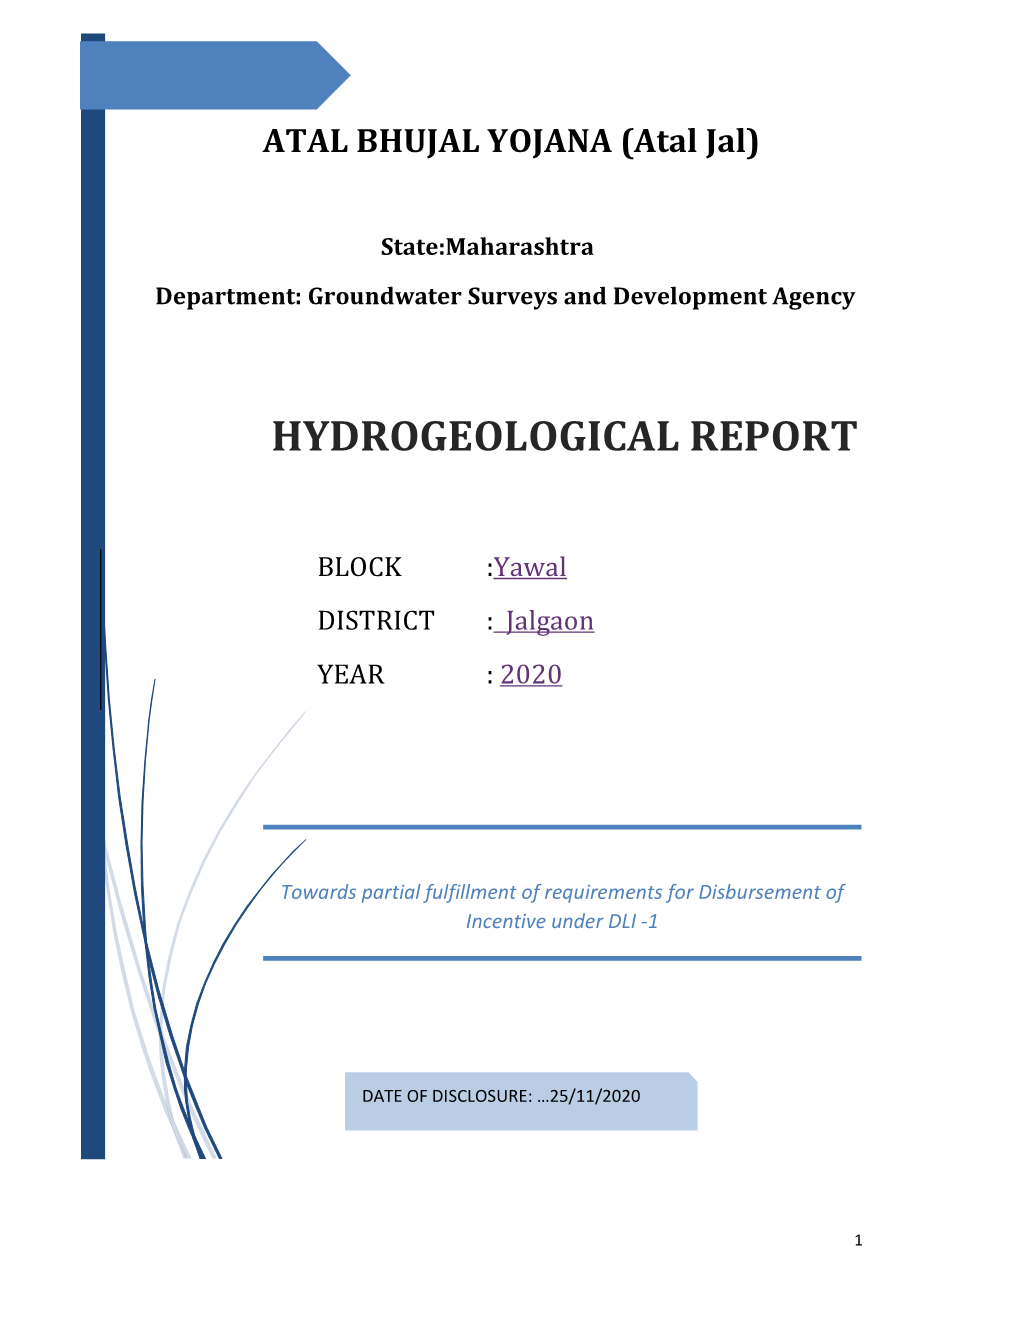 Atal Bhujal Hydrogeological Report- Taluka Yawal District Jalgaon